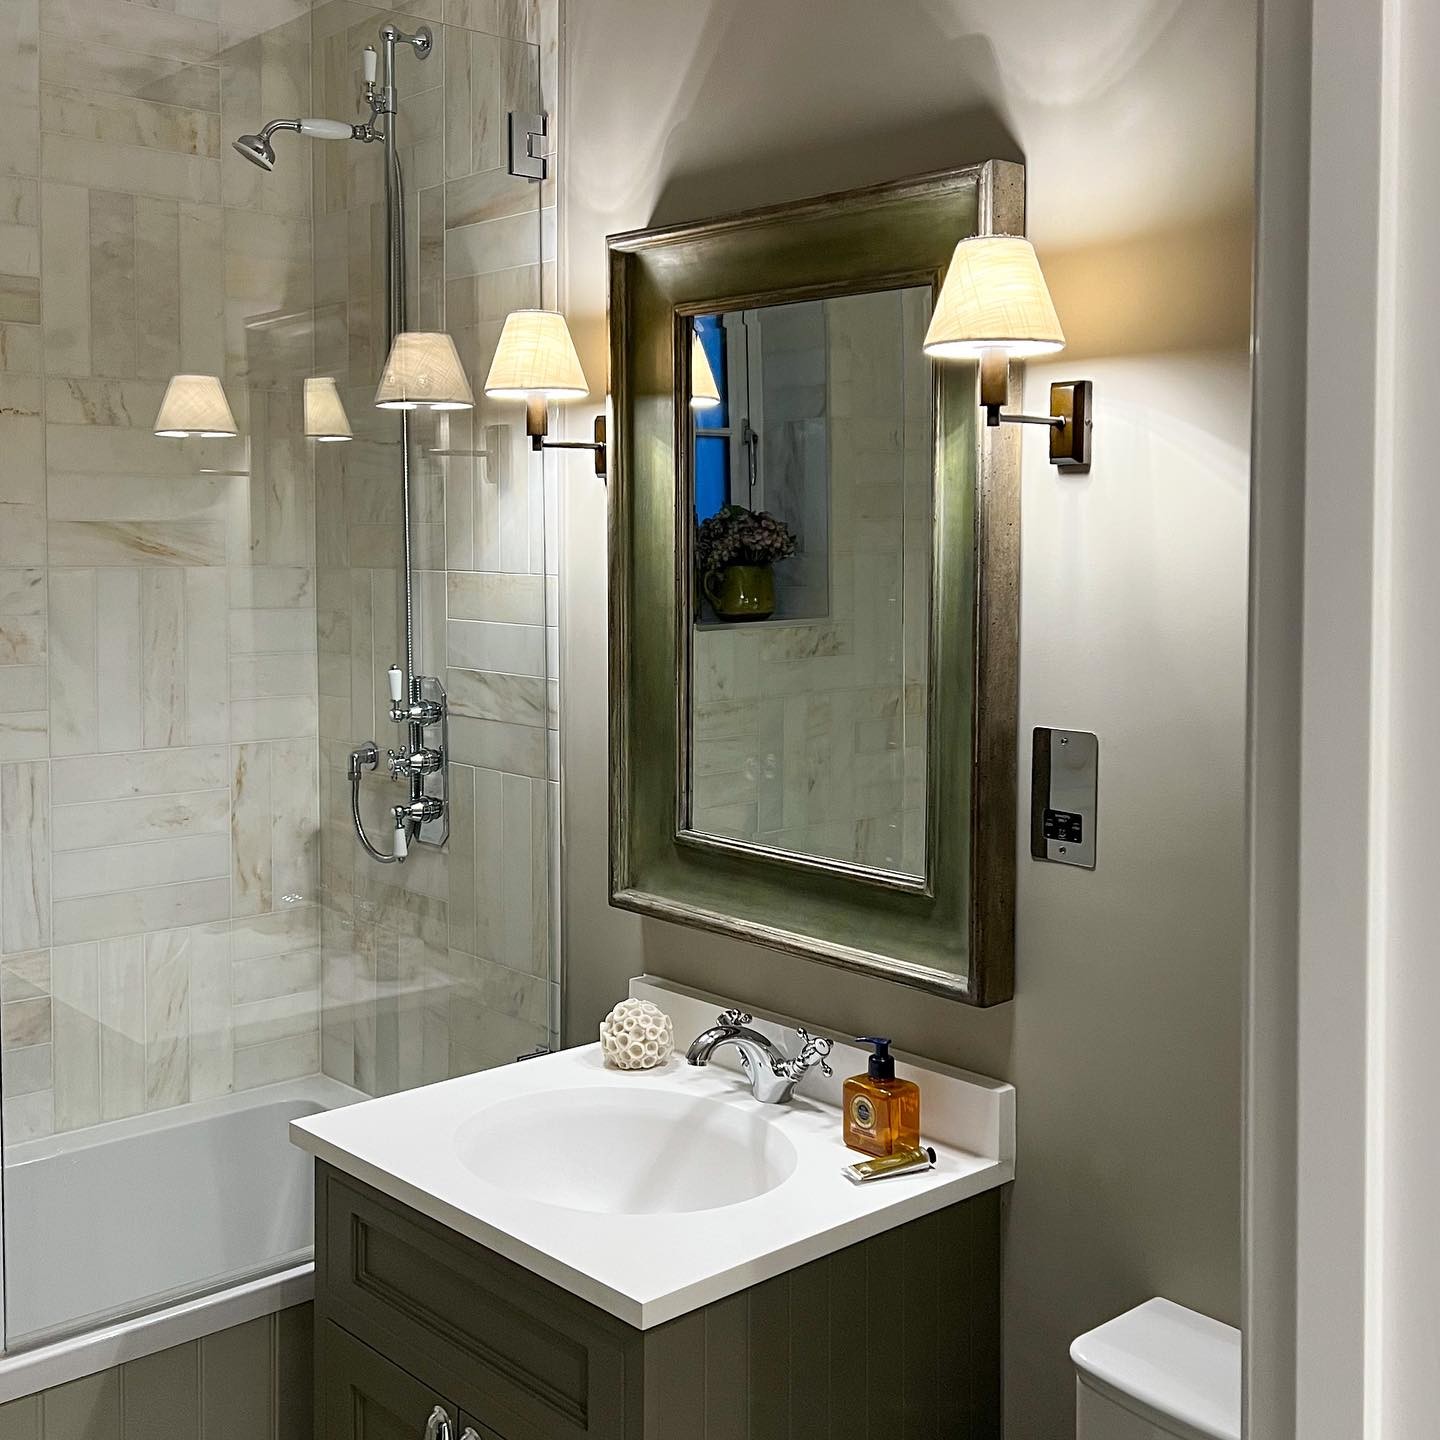 Stylish bathroom interior Hardwick White review